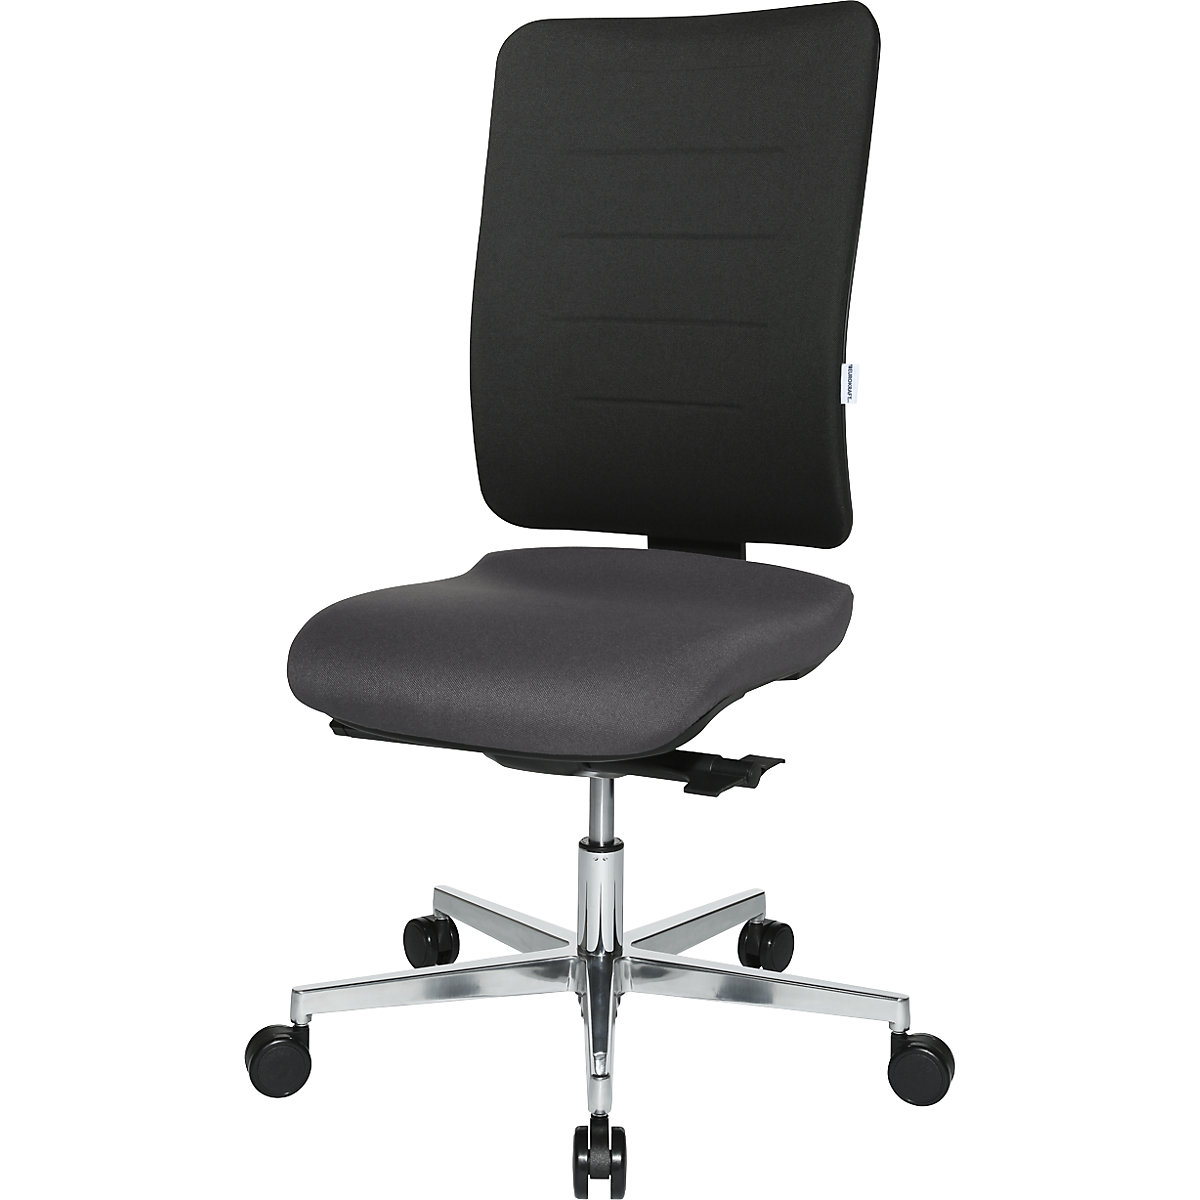 Uredska okretna stolica V3 – eurokraft pro, obloženi naslon za leđa, u crnoj / antracit boji-6